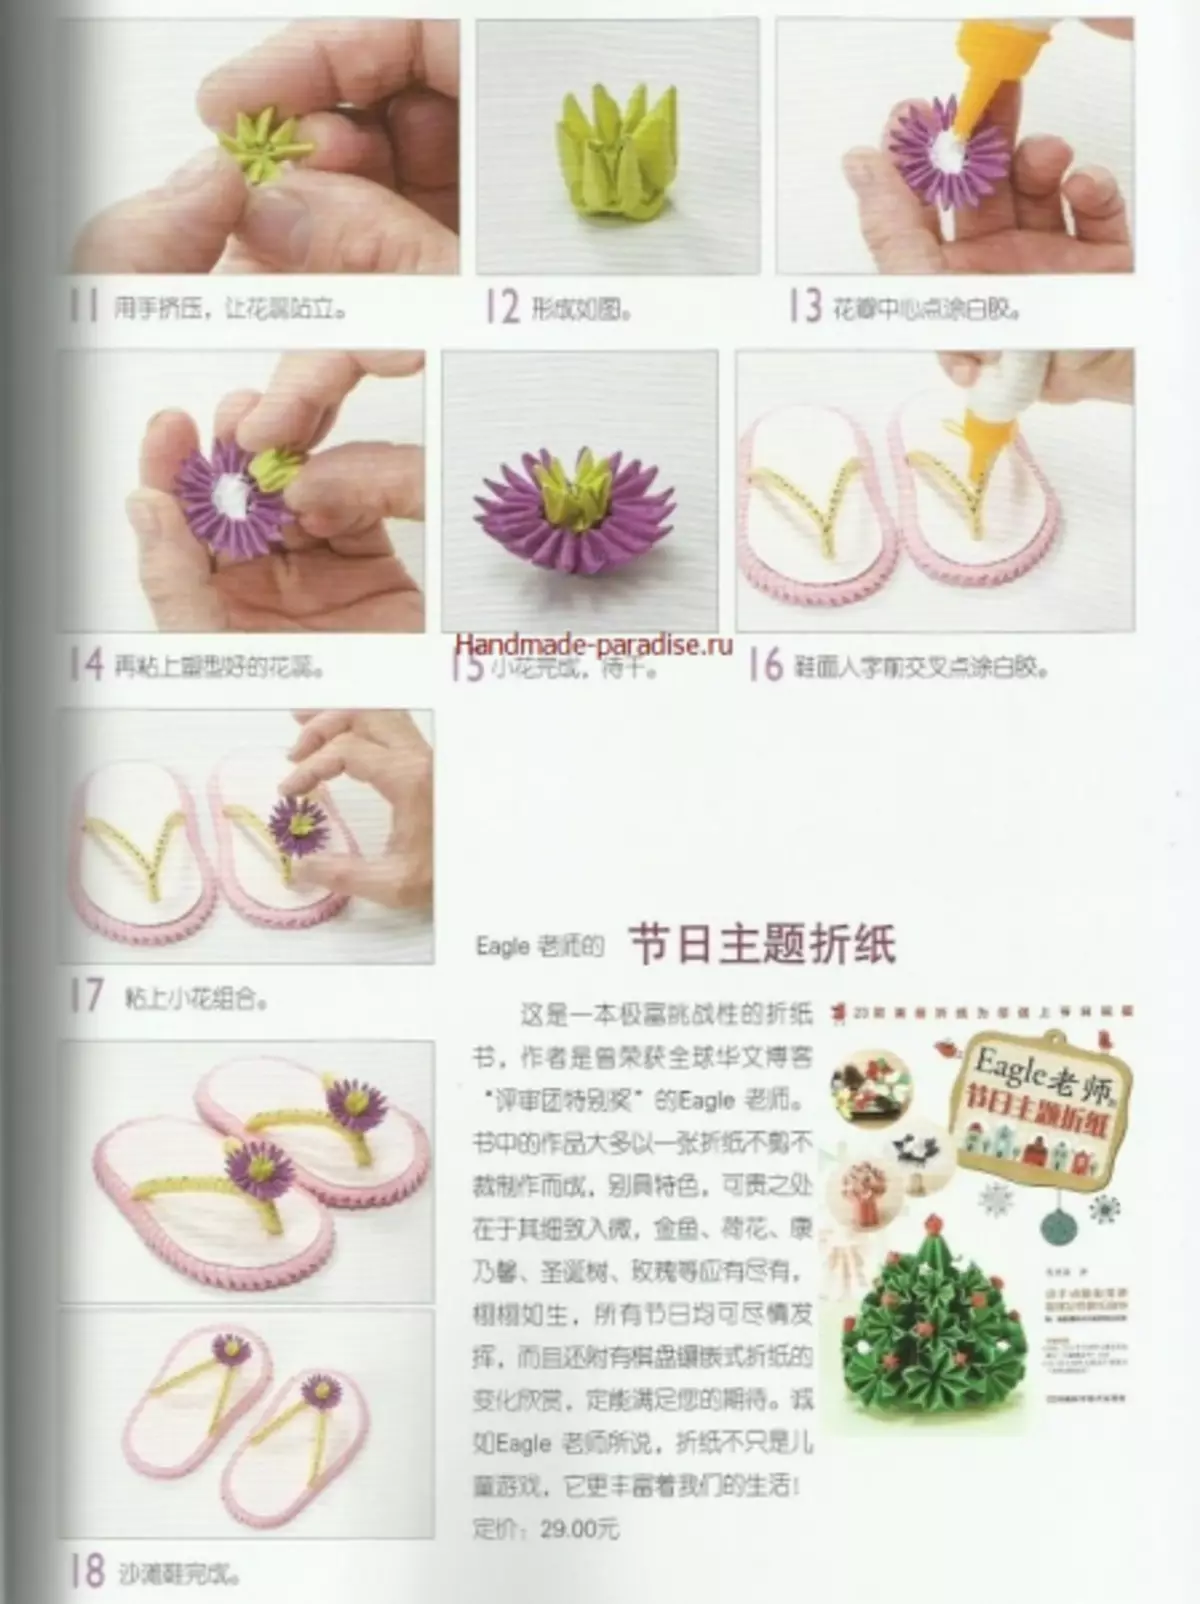 Origami modular. Revista japonesa con clases magistrales.